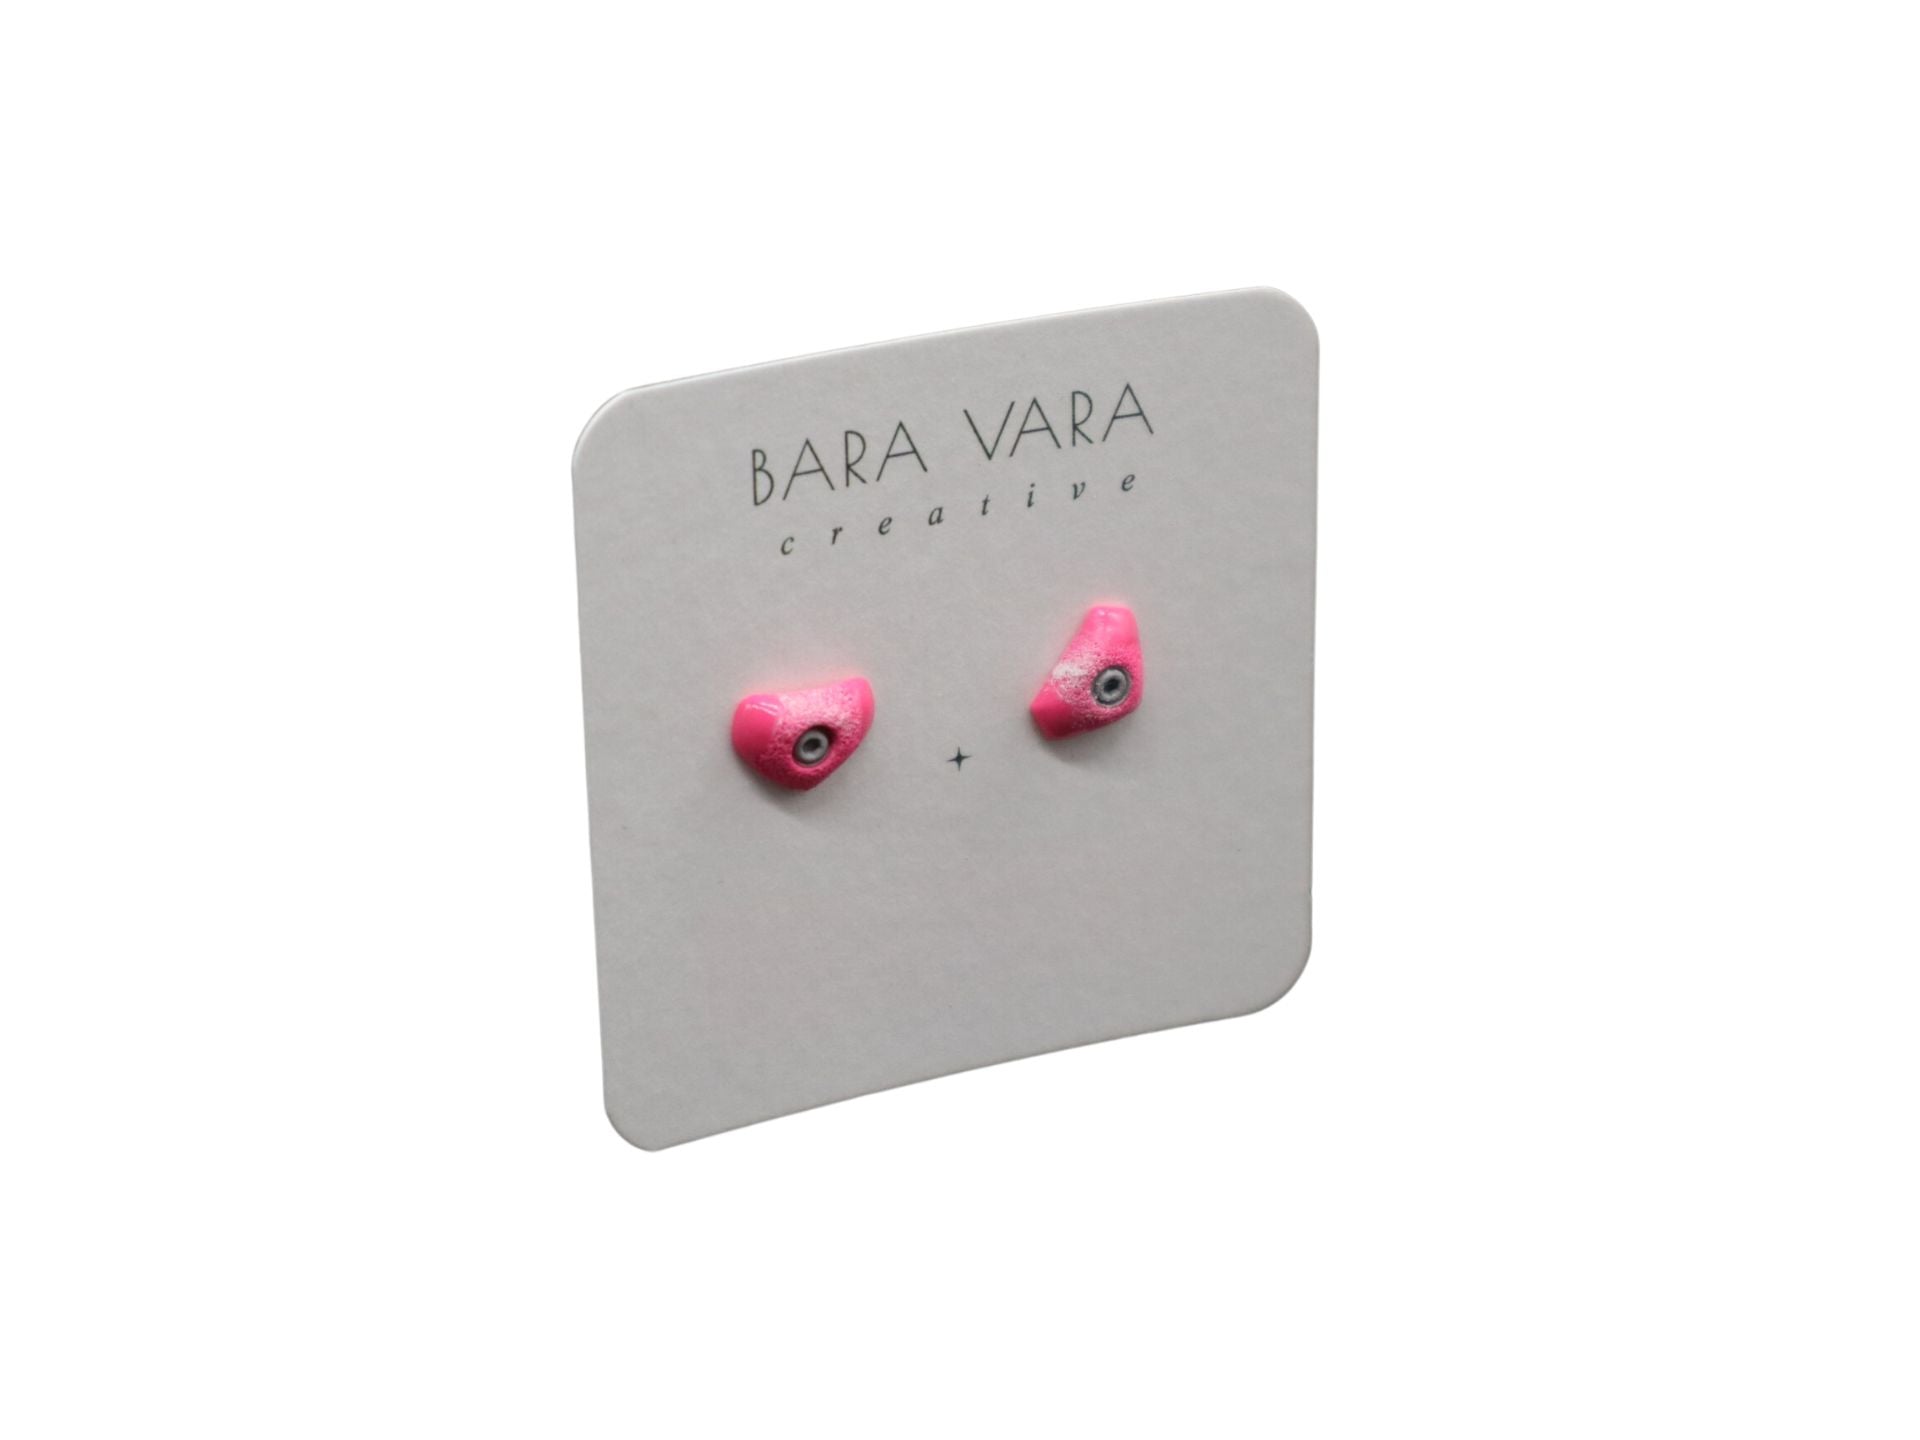 Bara Vara Creative Earrings - Pink Triangle Crimp (Chalky) - Happy Biner